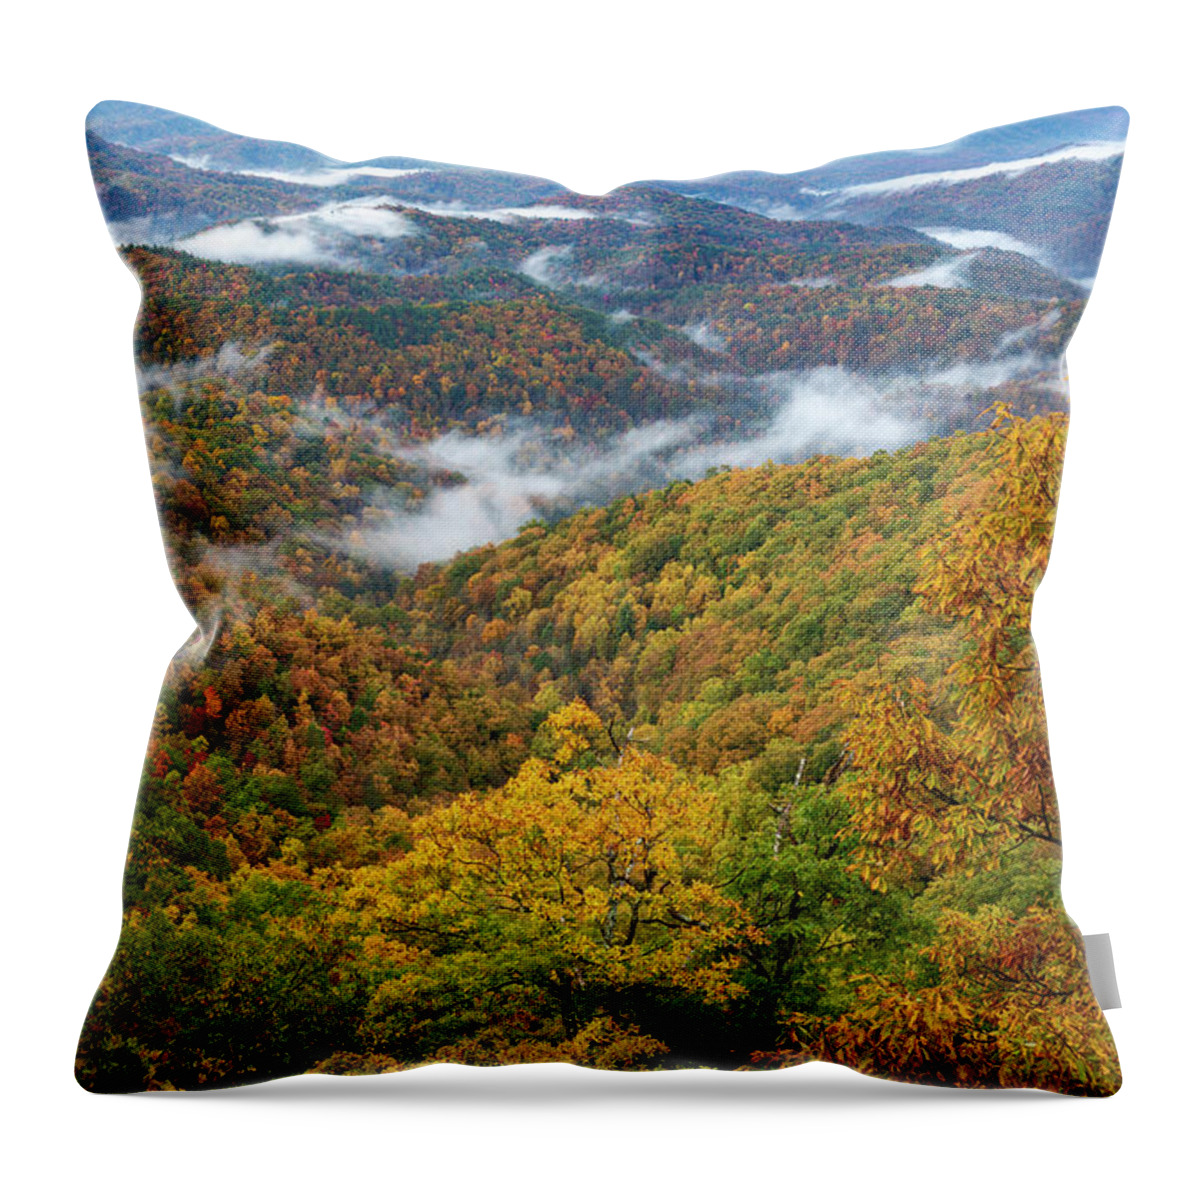 Vivid Autumn Landscape On The Blue Ridge Throw Pillow featuring the photograph Autumn Blue Ridge Mountains by Dan Sproul